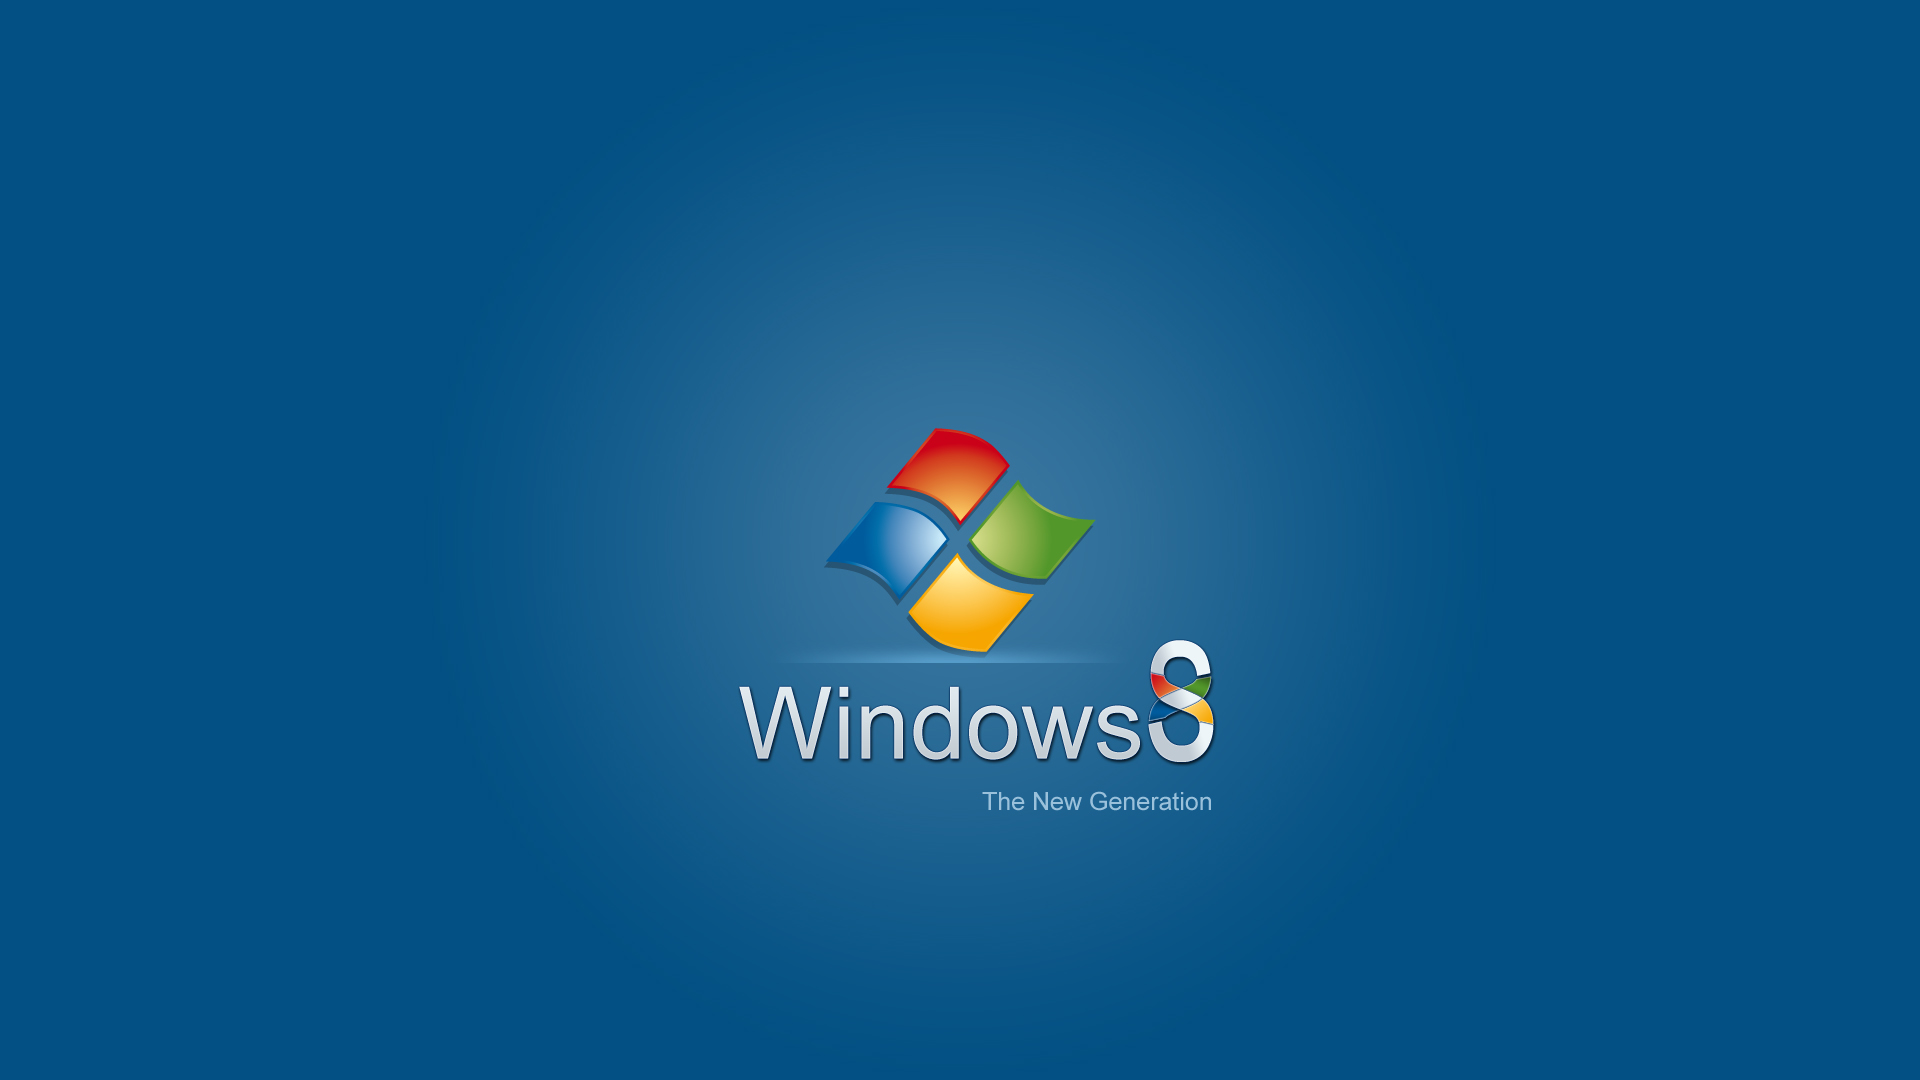 windows 8 wallpaper hd 11 Download Windows 8 Wallpapers HD